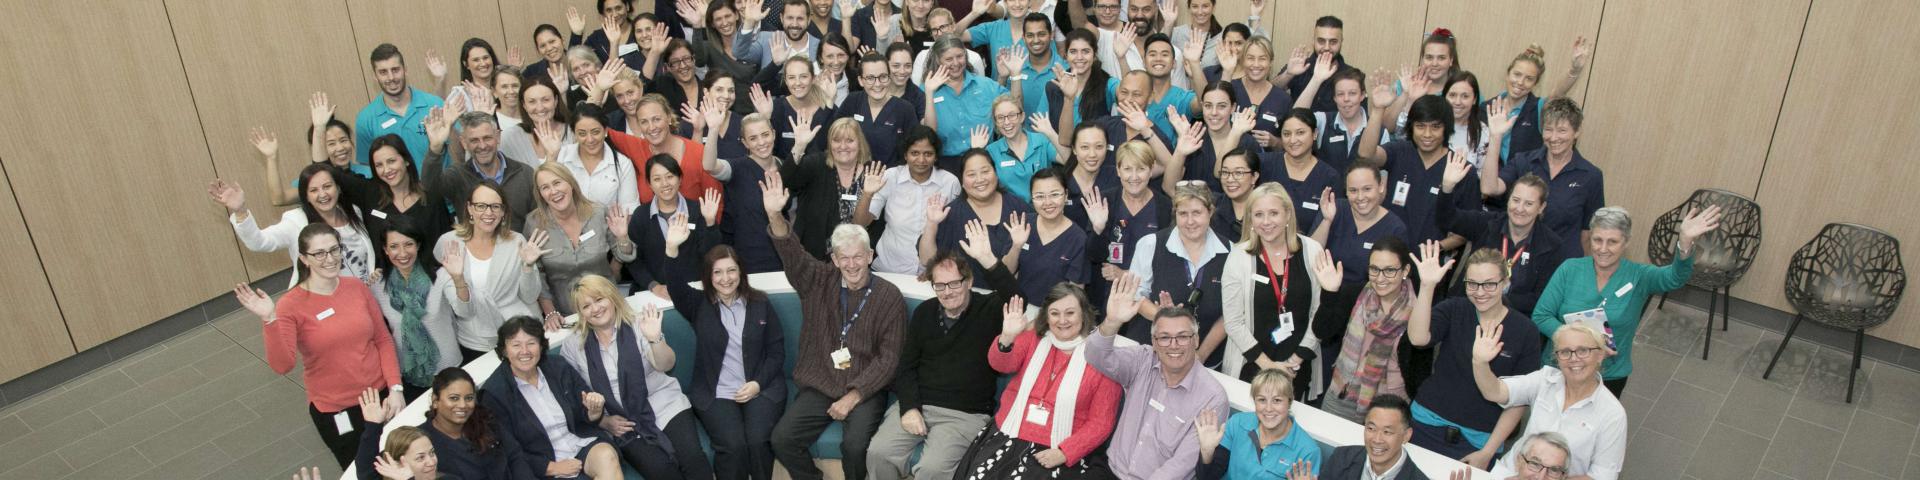 Group of staff waving